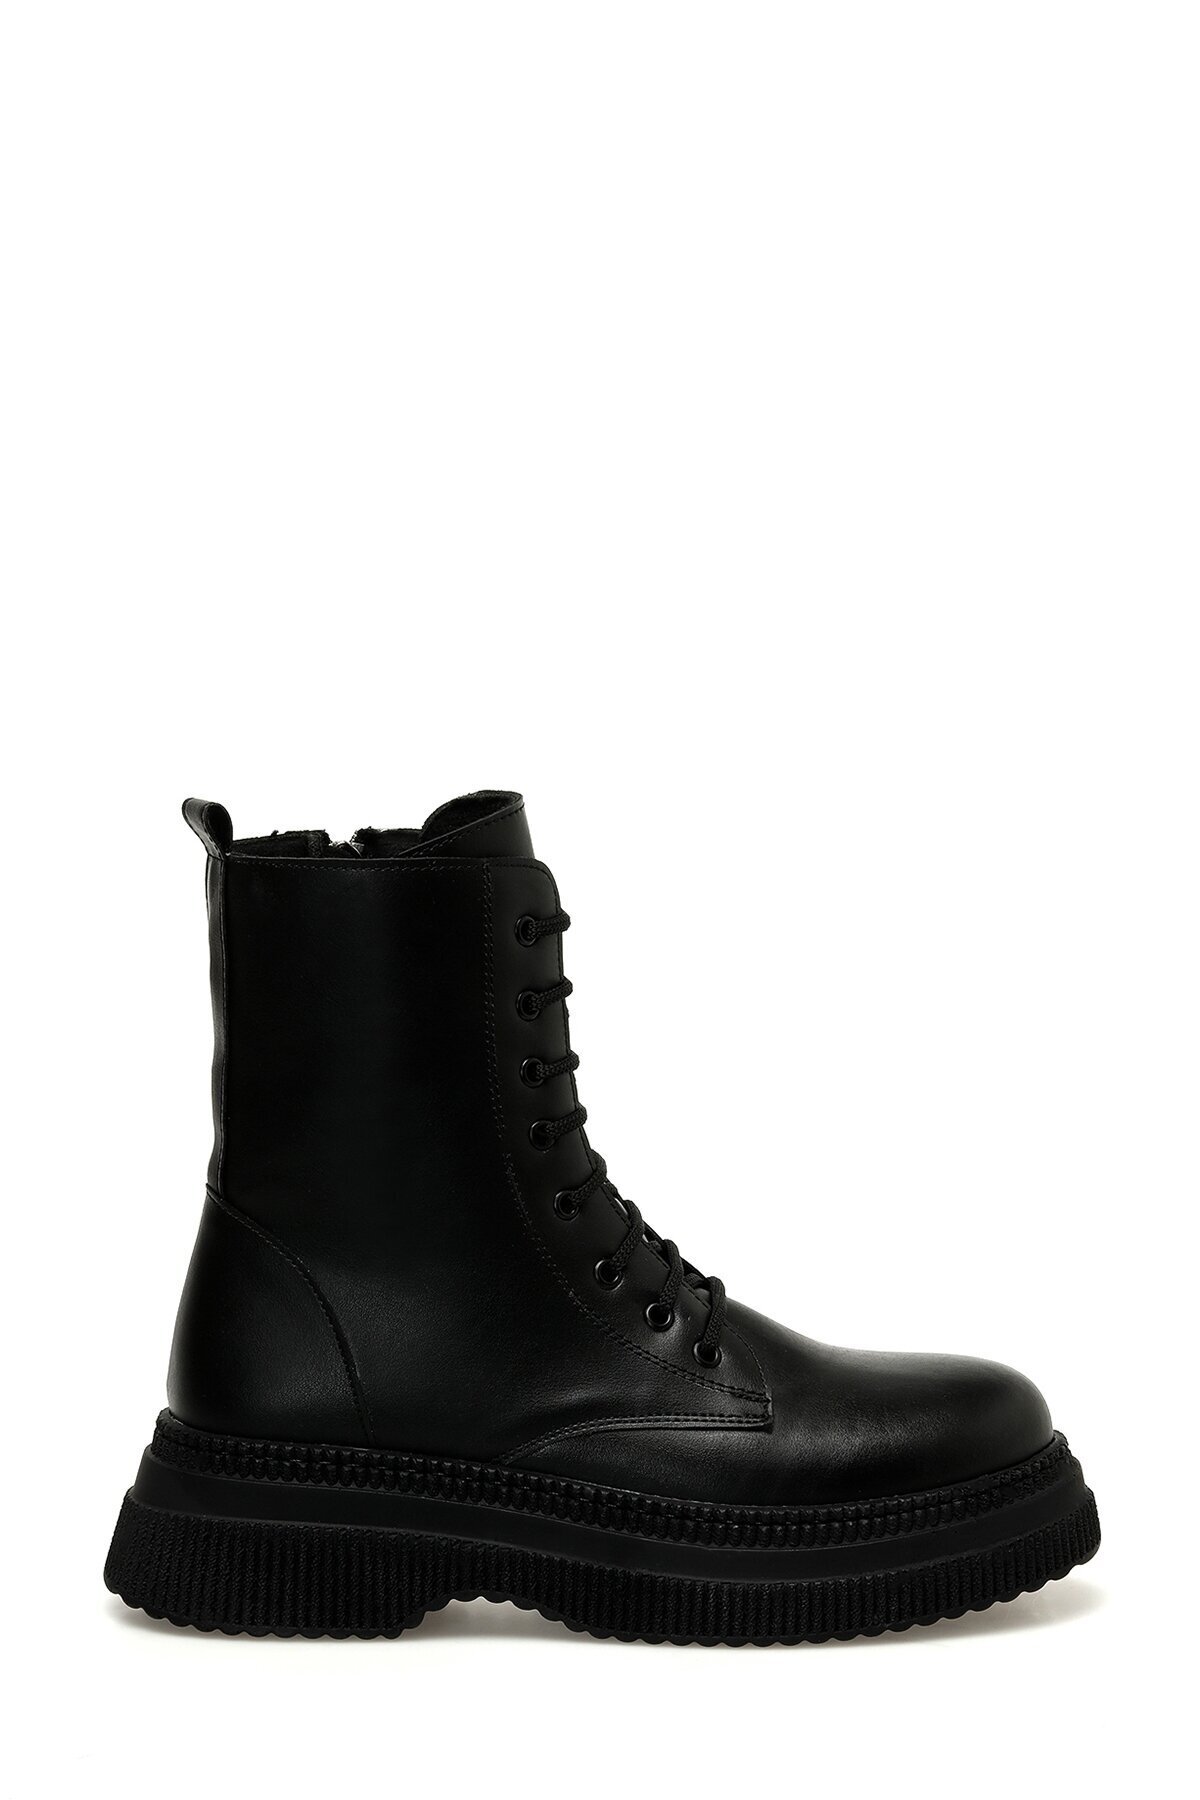 Levně Butigo 3PR Black Women's Boots